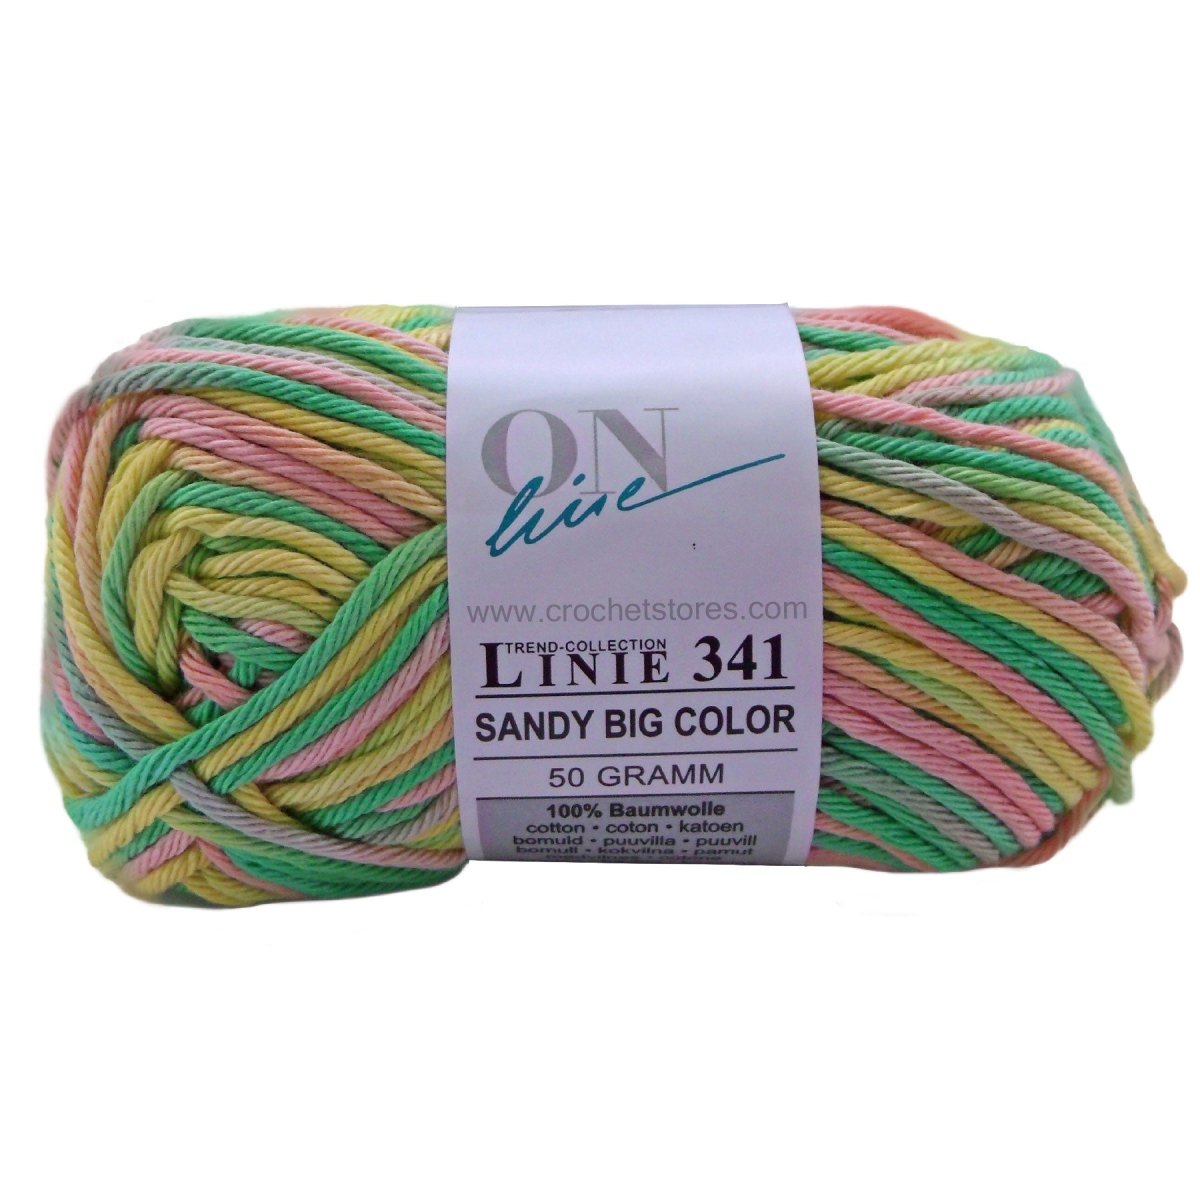 SANDY BIG - Crochetstores110341-1024014366147831